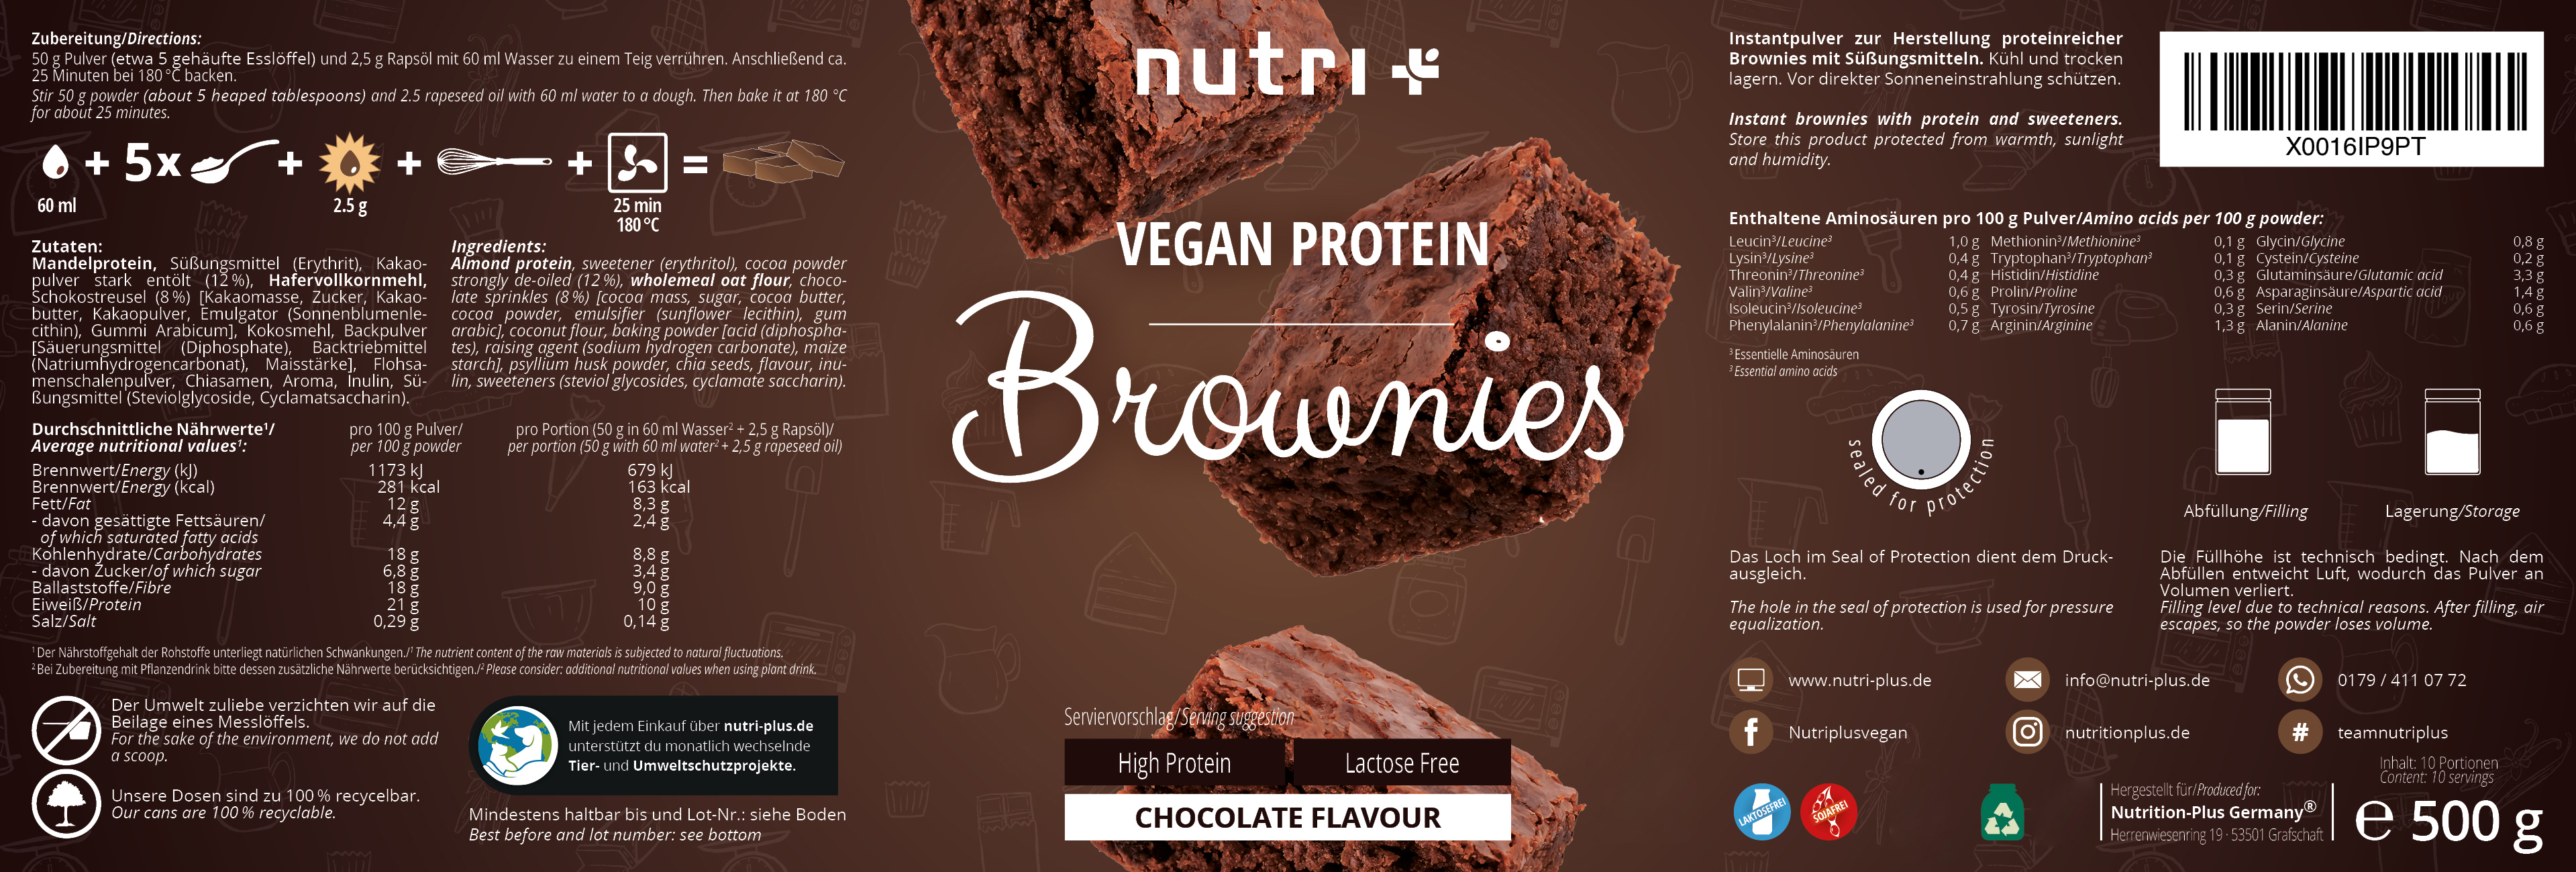 Protein-Brownies Schokolade